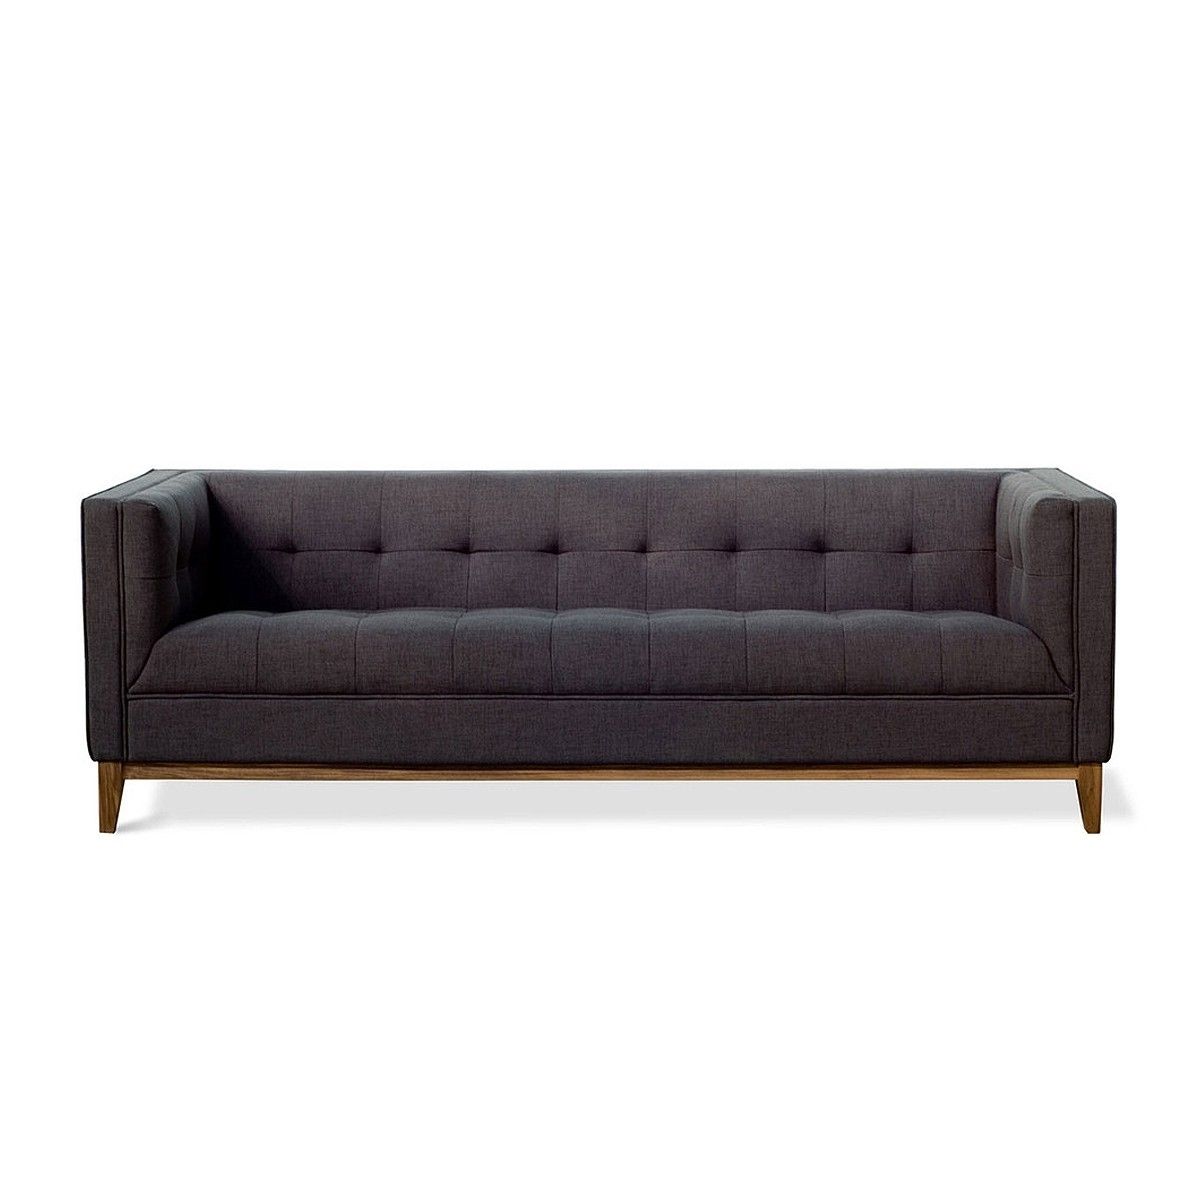 Preferred Gus Modern – Atwood 3 Seater Sofa – Modern Sofas Buy Your Regarding Modern 3 Seater Sofas (View 5 of 20)